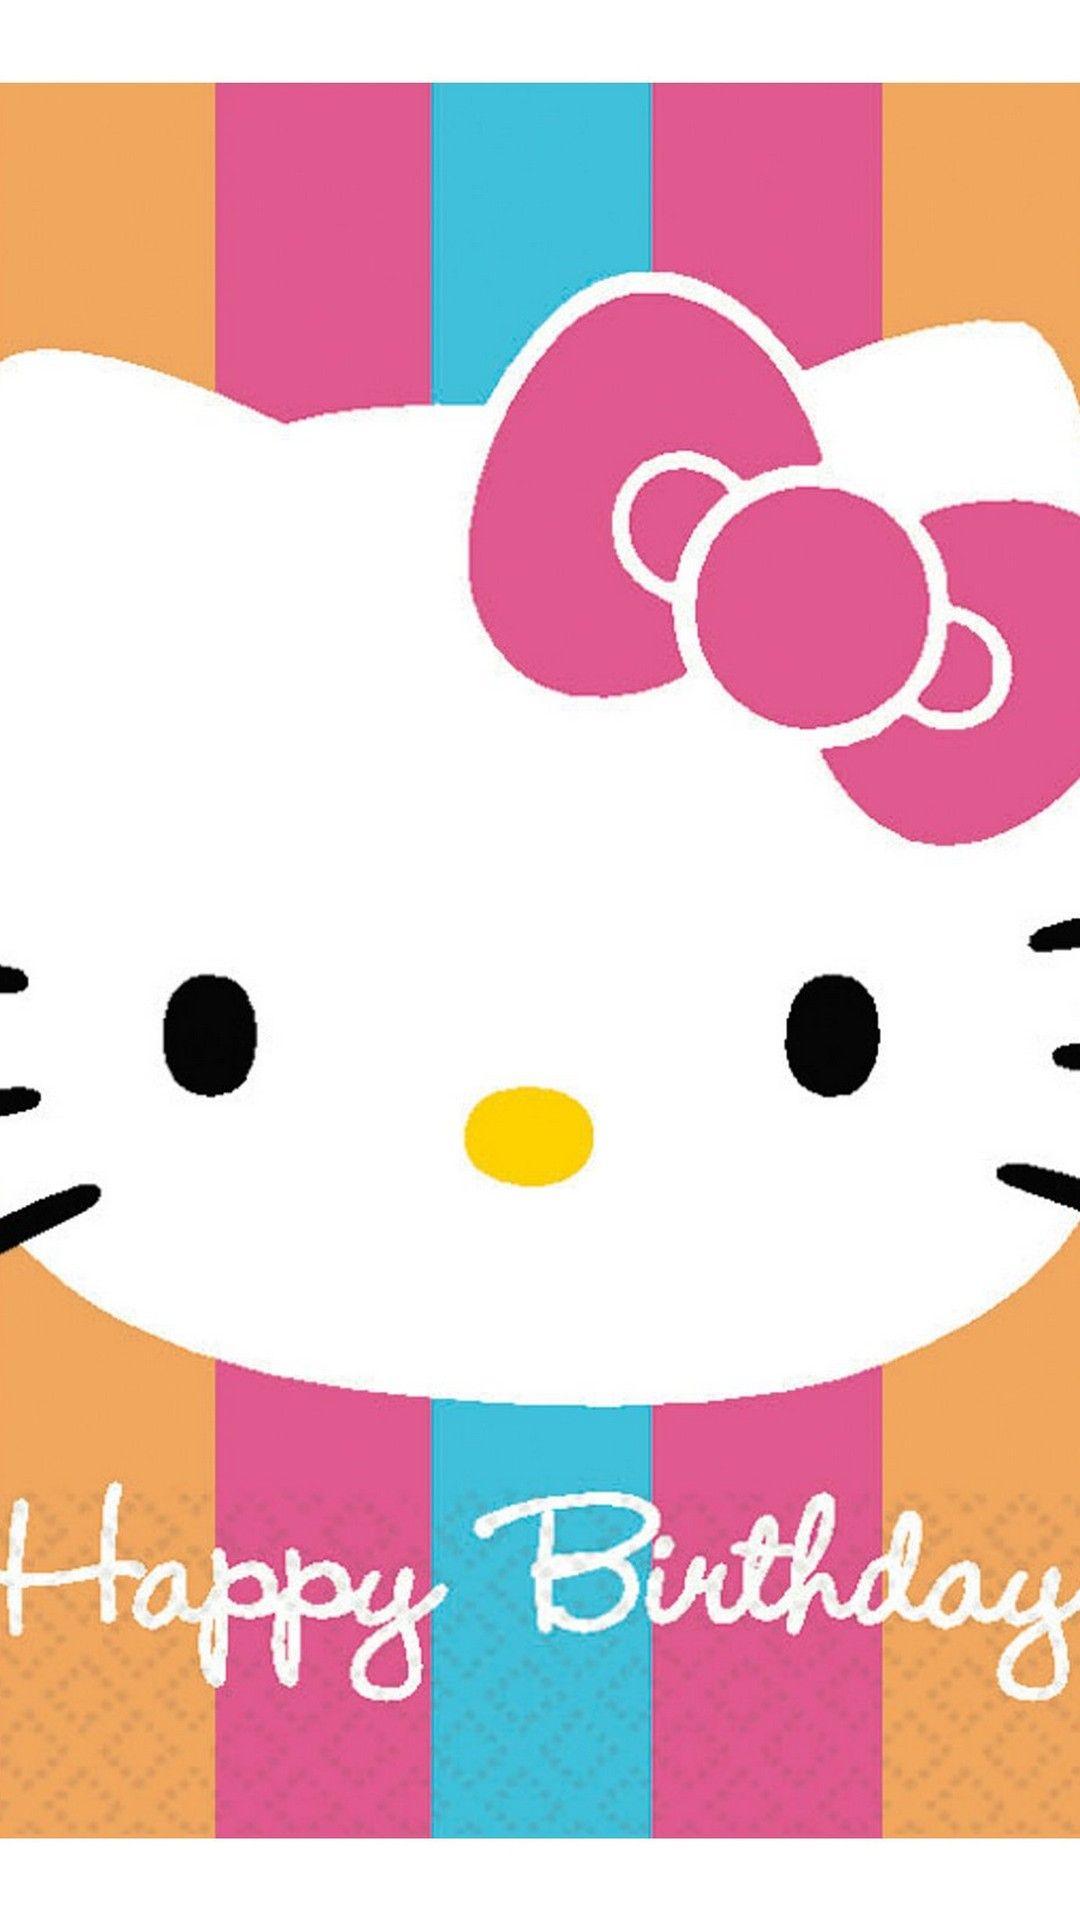 Hello Kitty Aesthetic Wallpapers - Top Free Hello Kitty Aesthetic